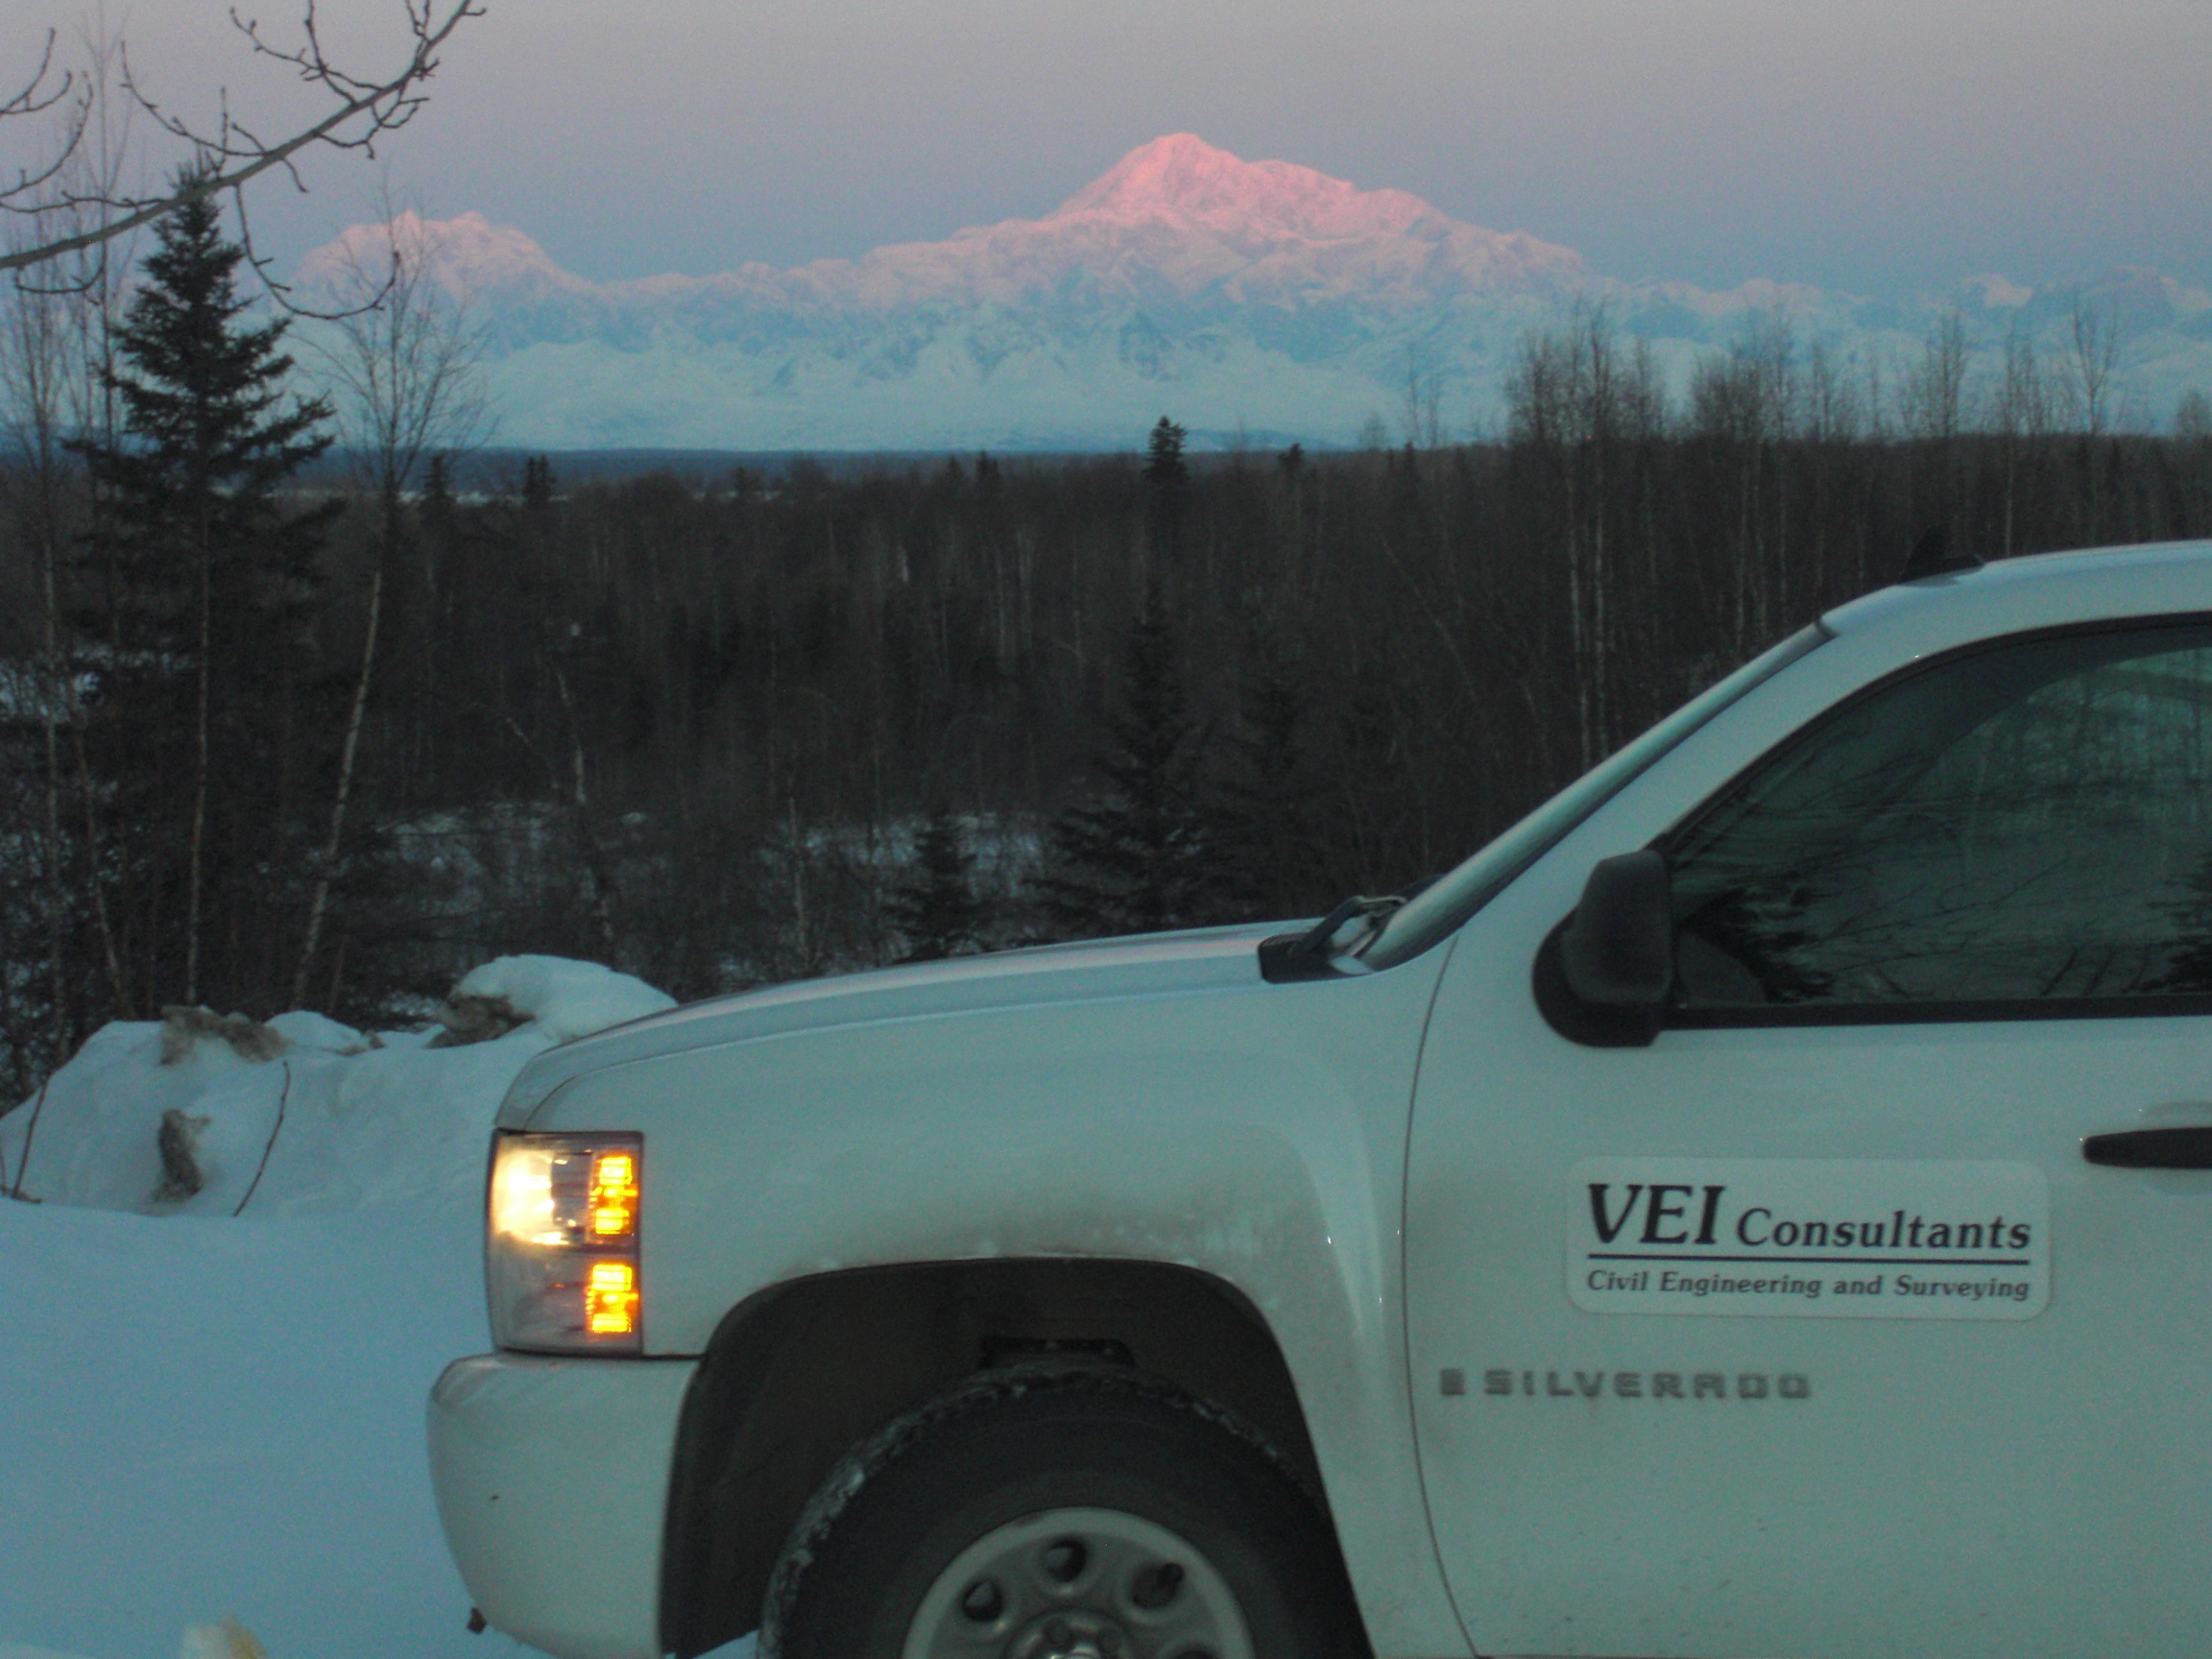 VEI Consultants - Alaska Civil and Environmental Engineering, Transportation, Water, Wastewater, Surveying Services